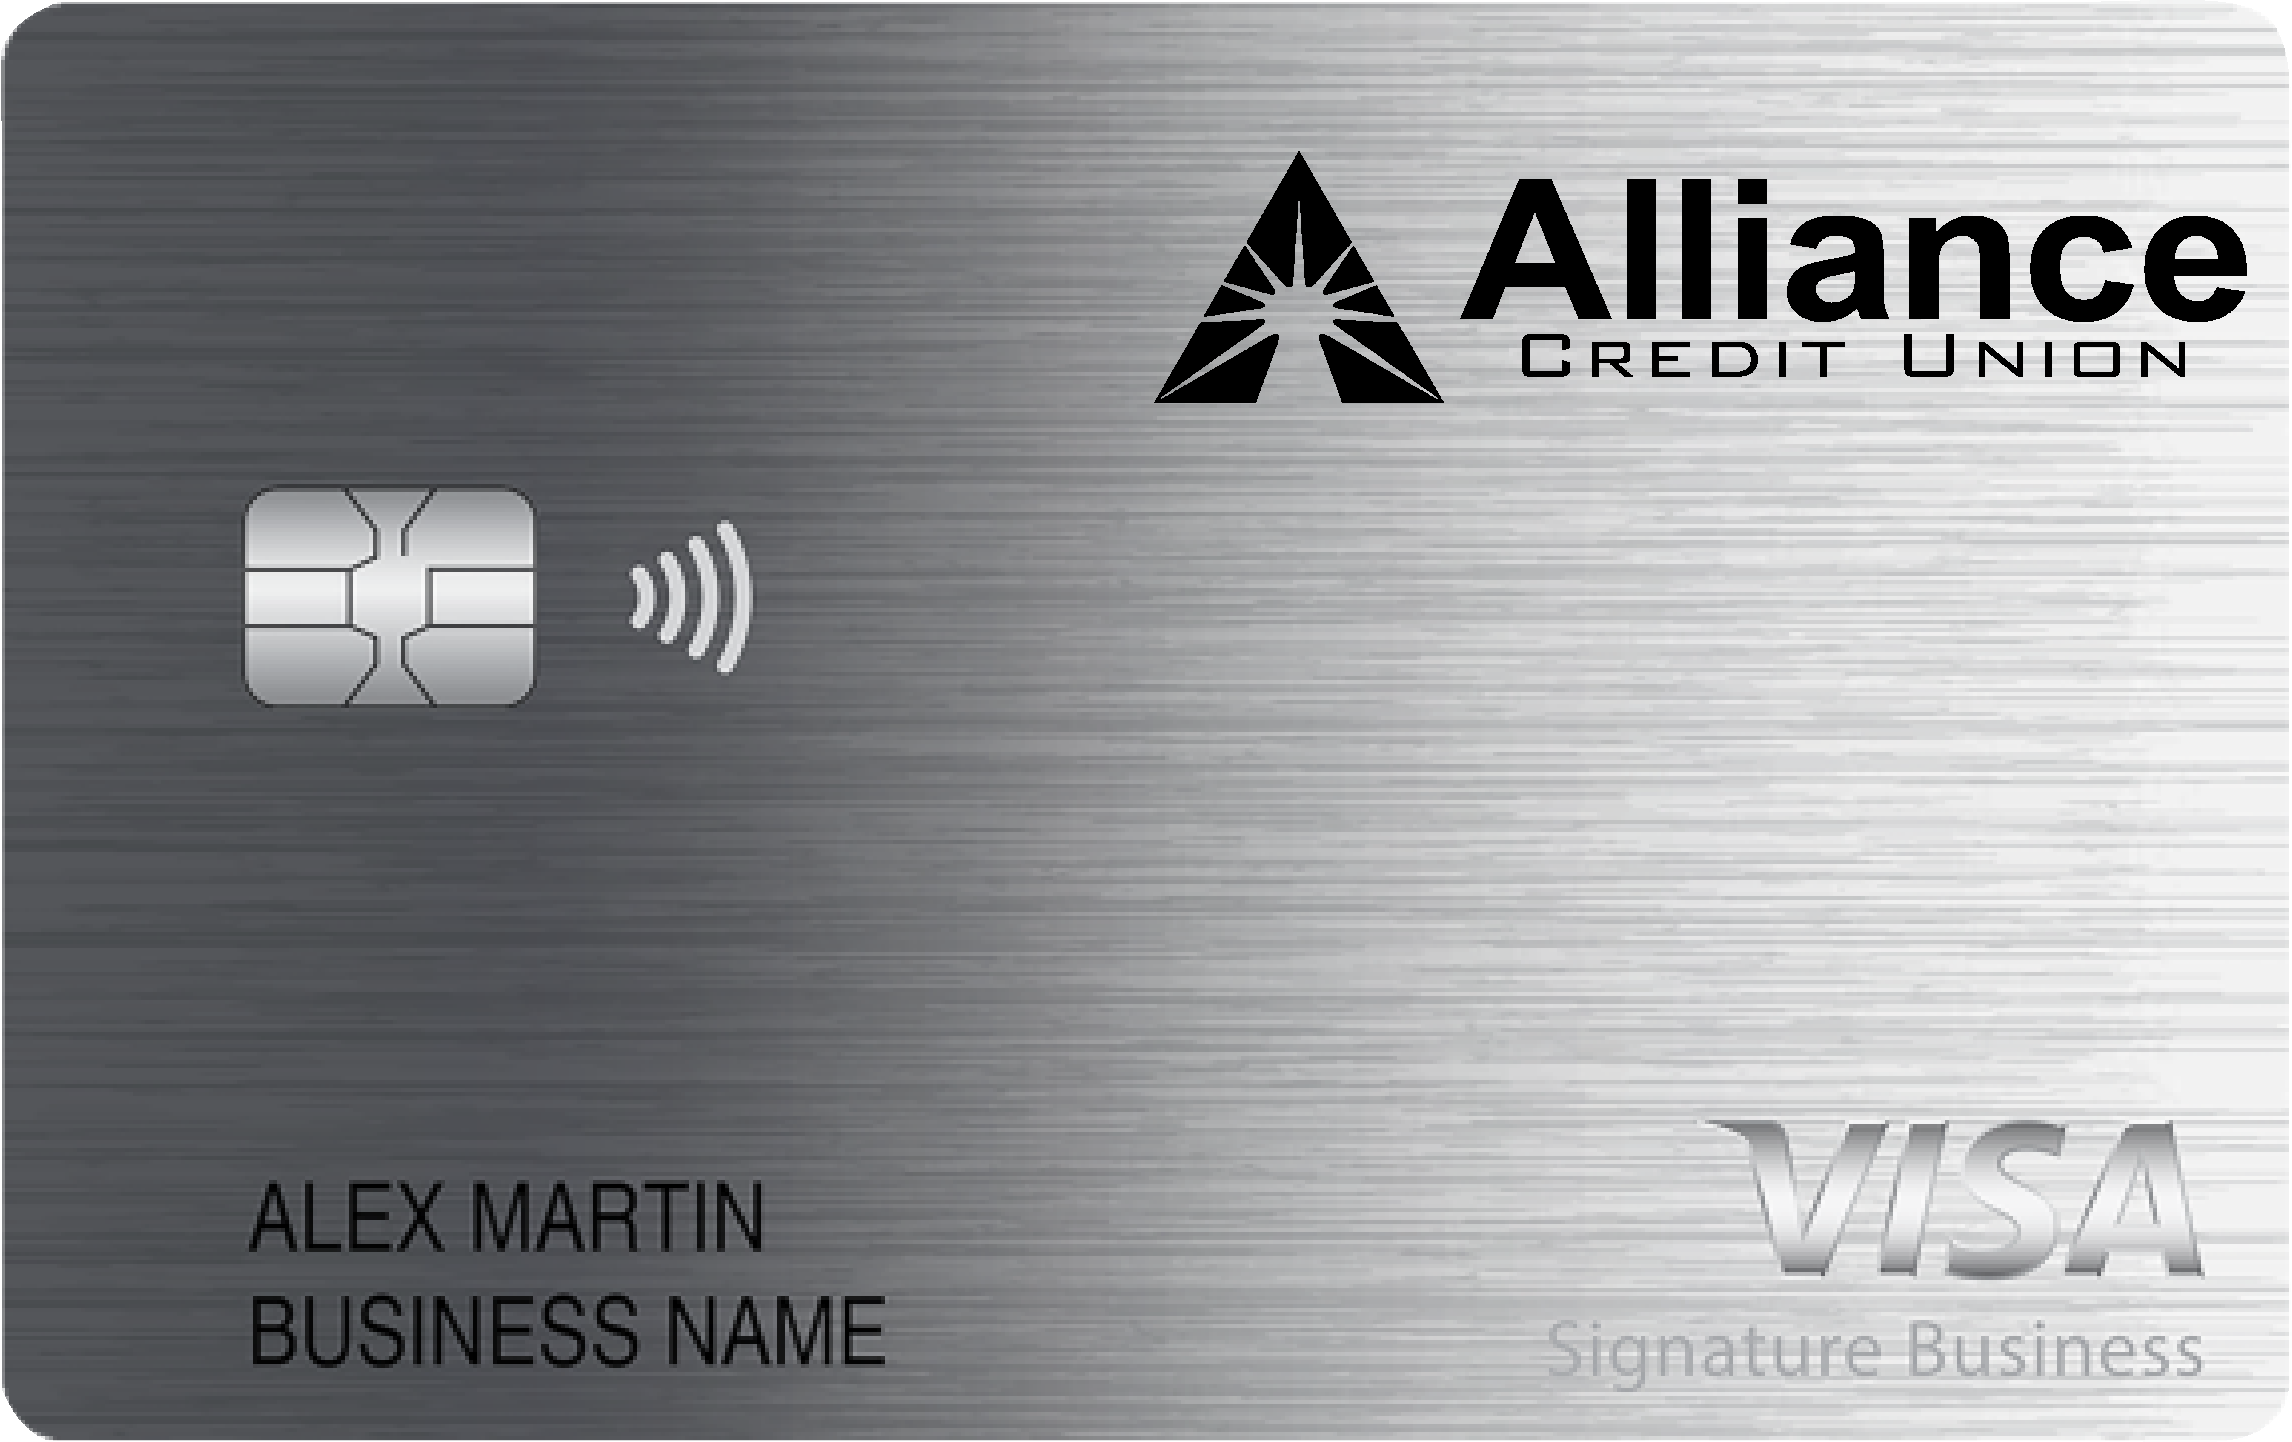 Alliance Credit Union Smart Business Rewards Card